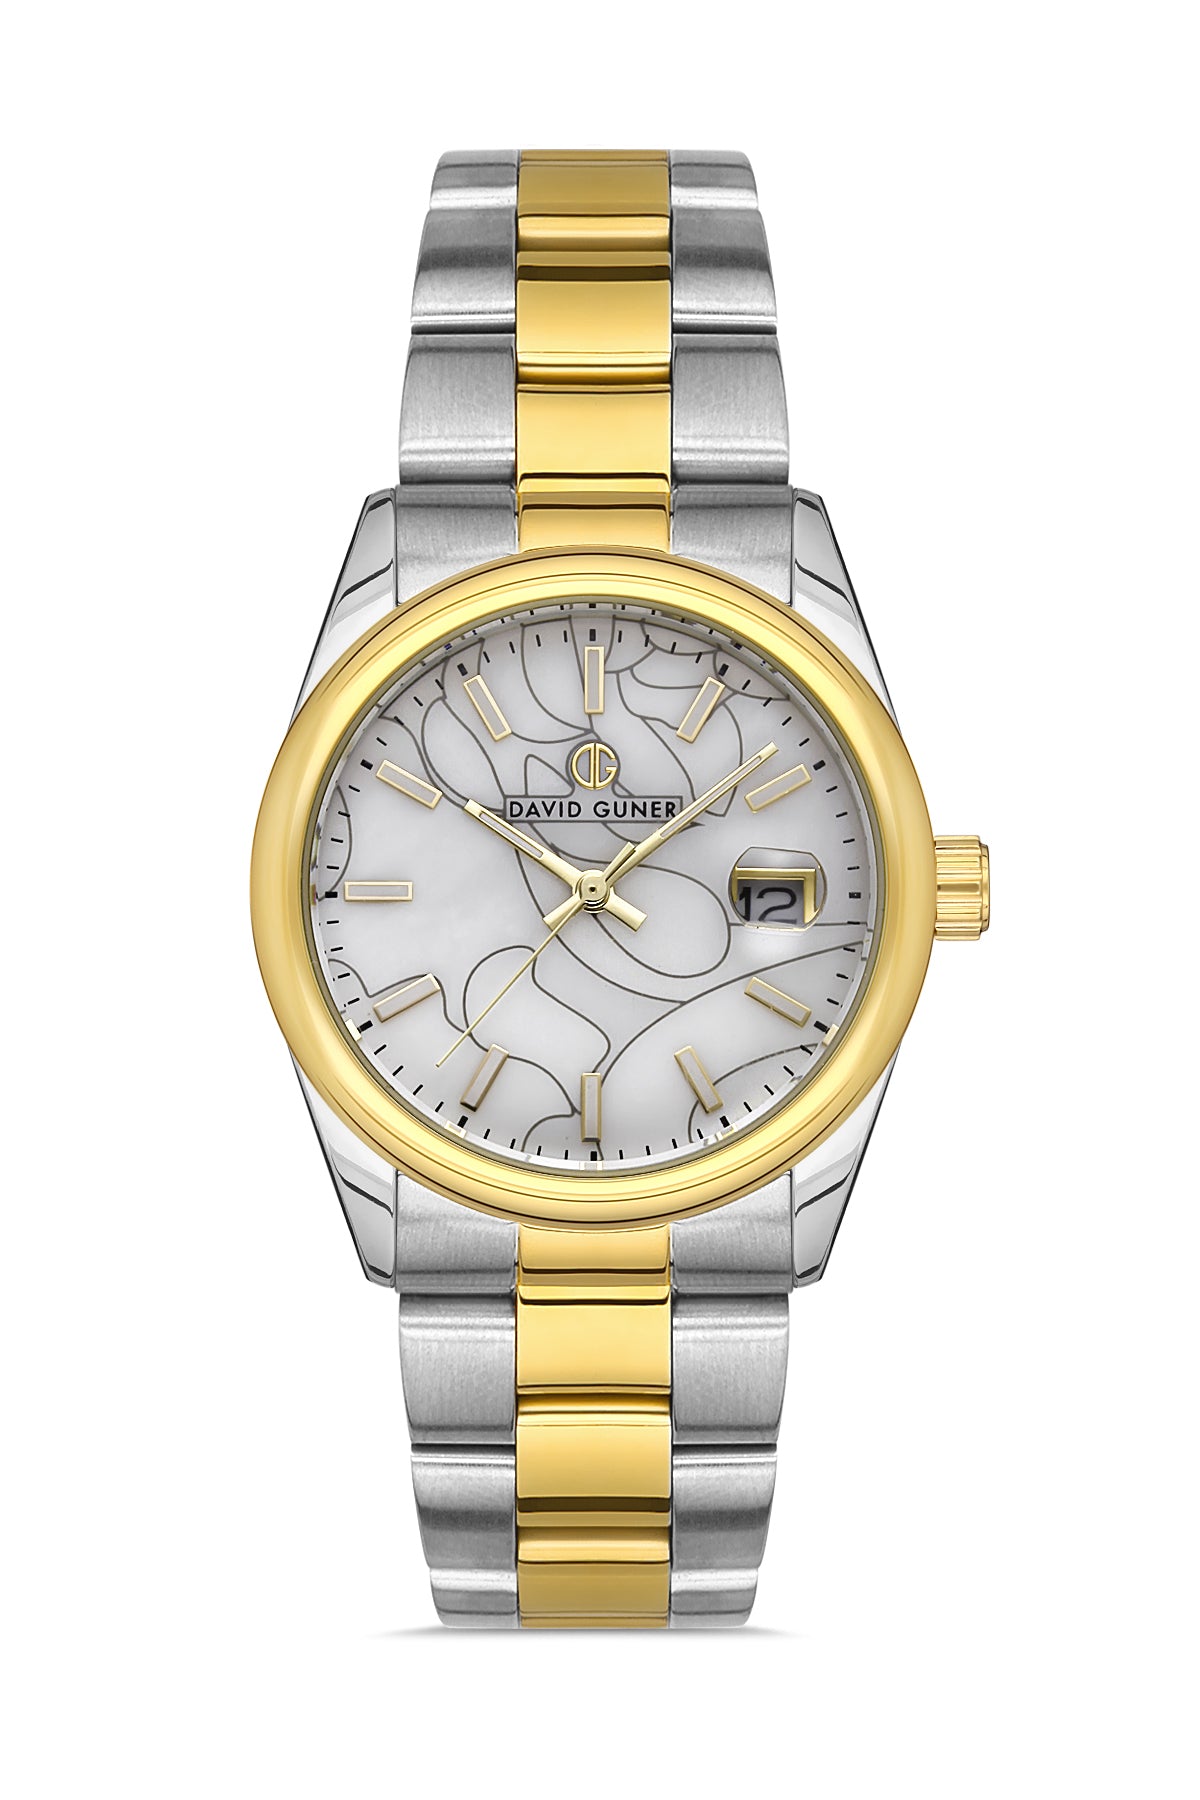 DAVID GUNER Yellow and White Coated Women's Wristwatch with Calendar